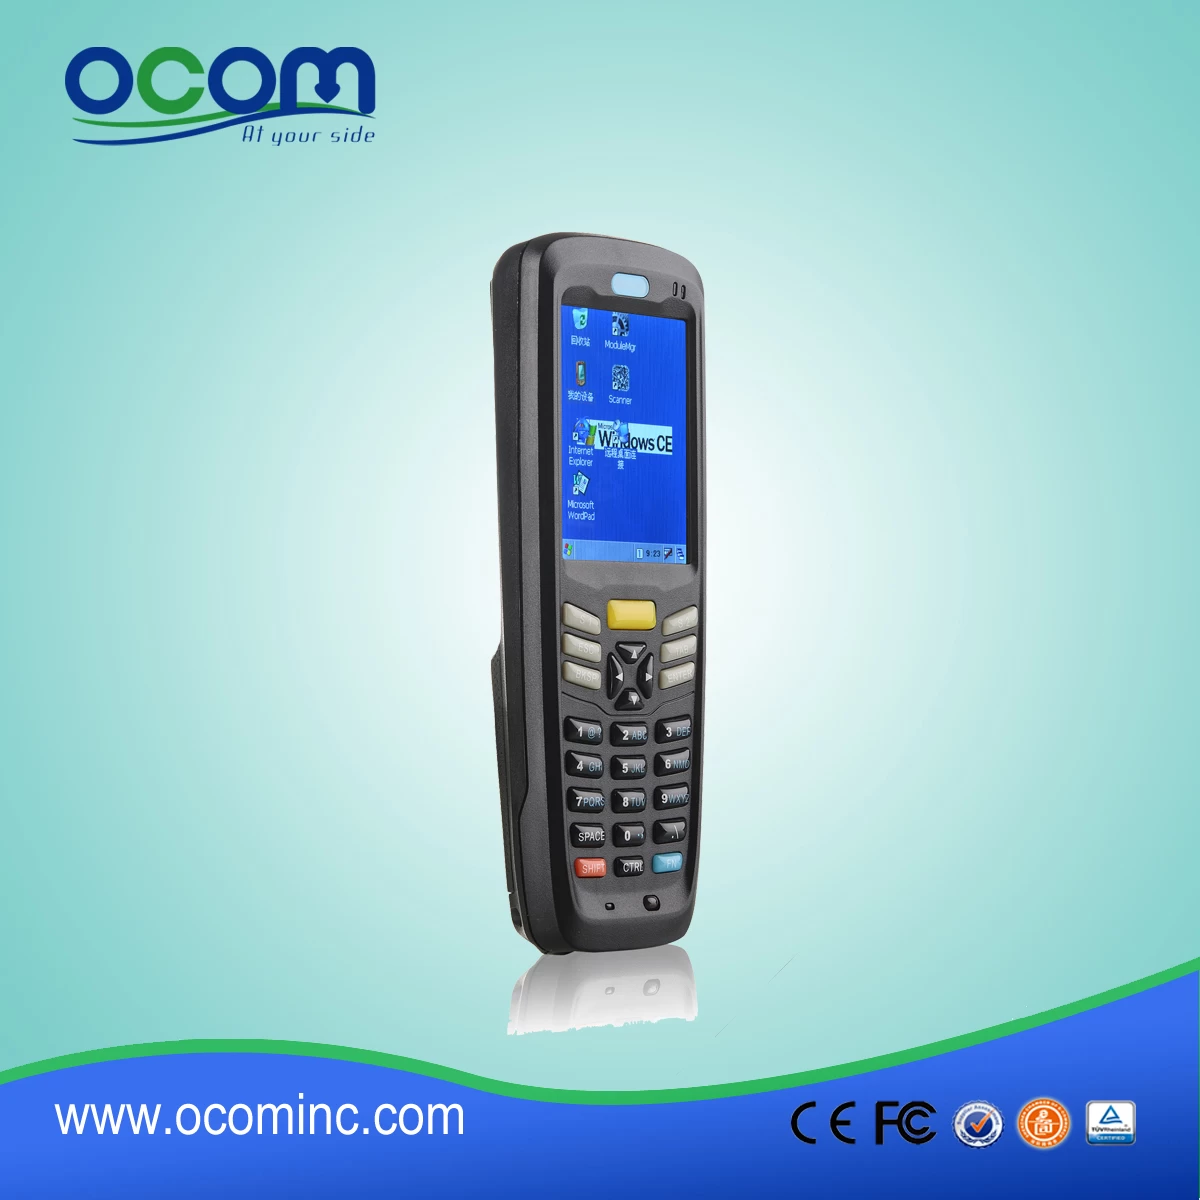 (OCBS-D6000) Win CE based Industrial PDA